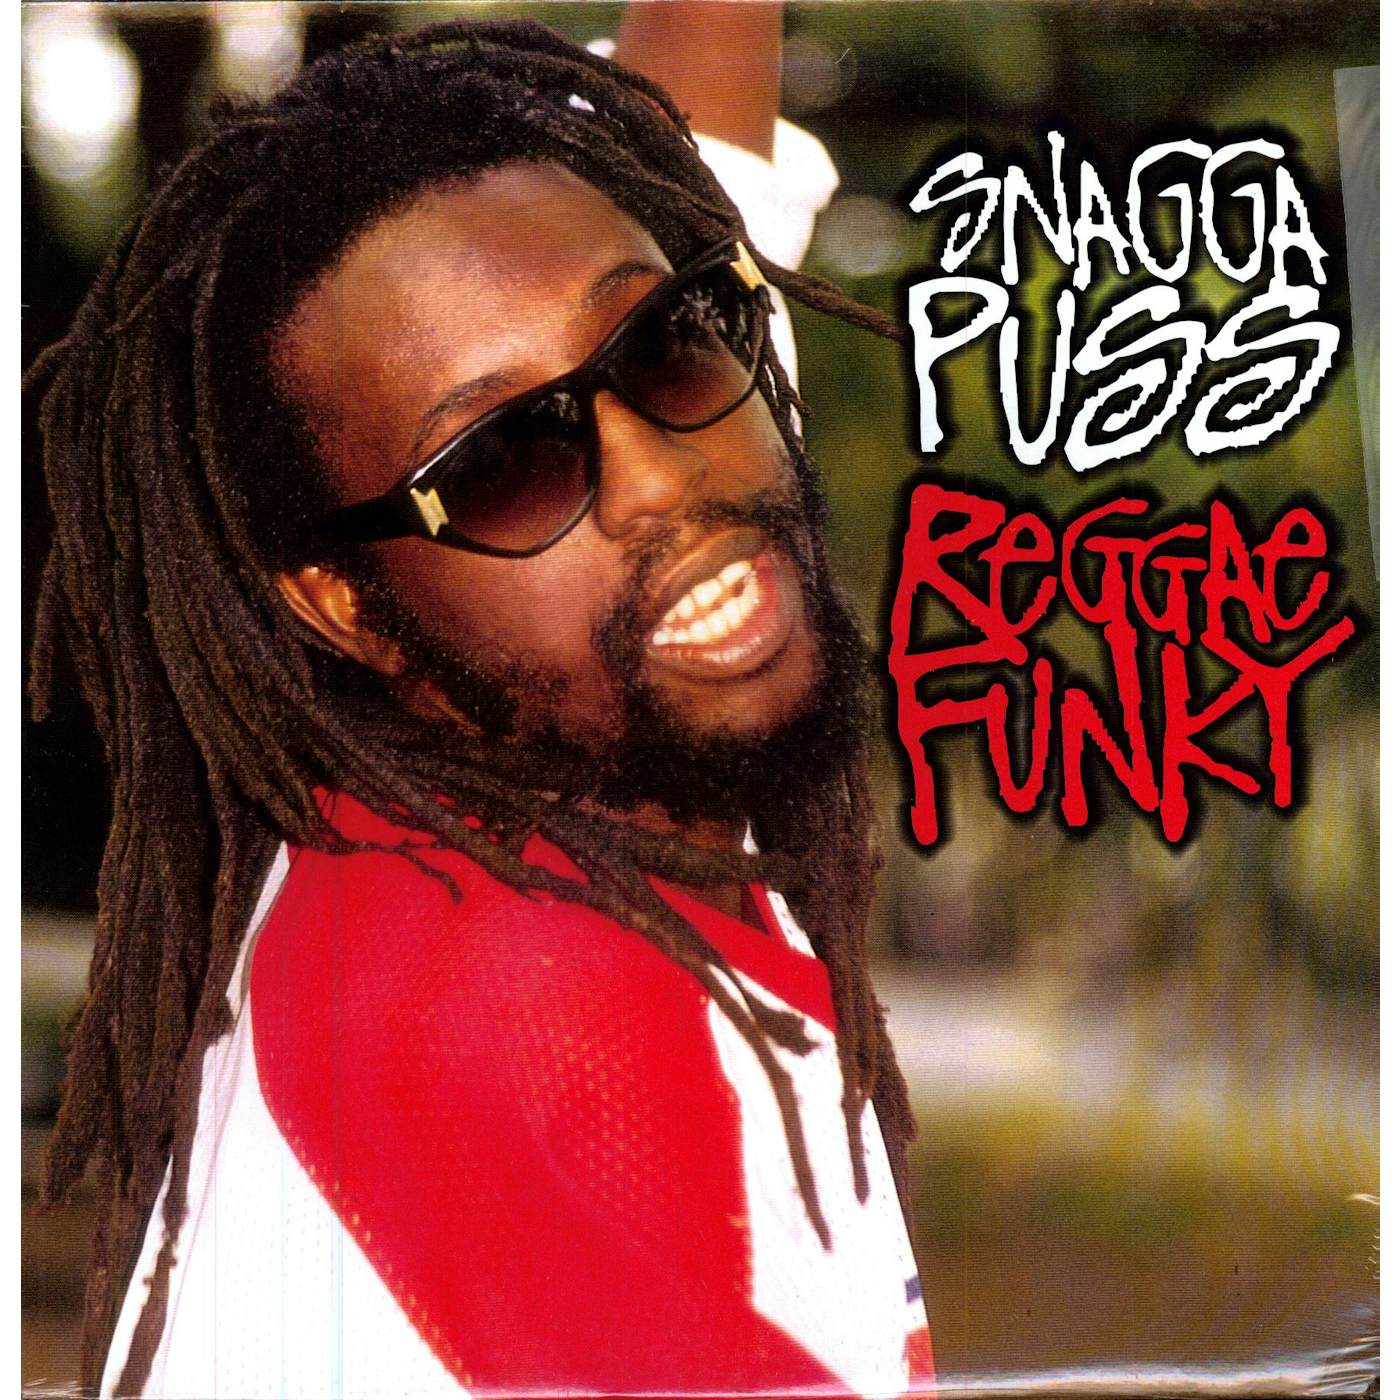 Snagga Puss Reggae Funky Vinyl Record